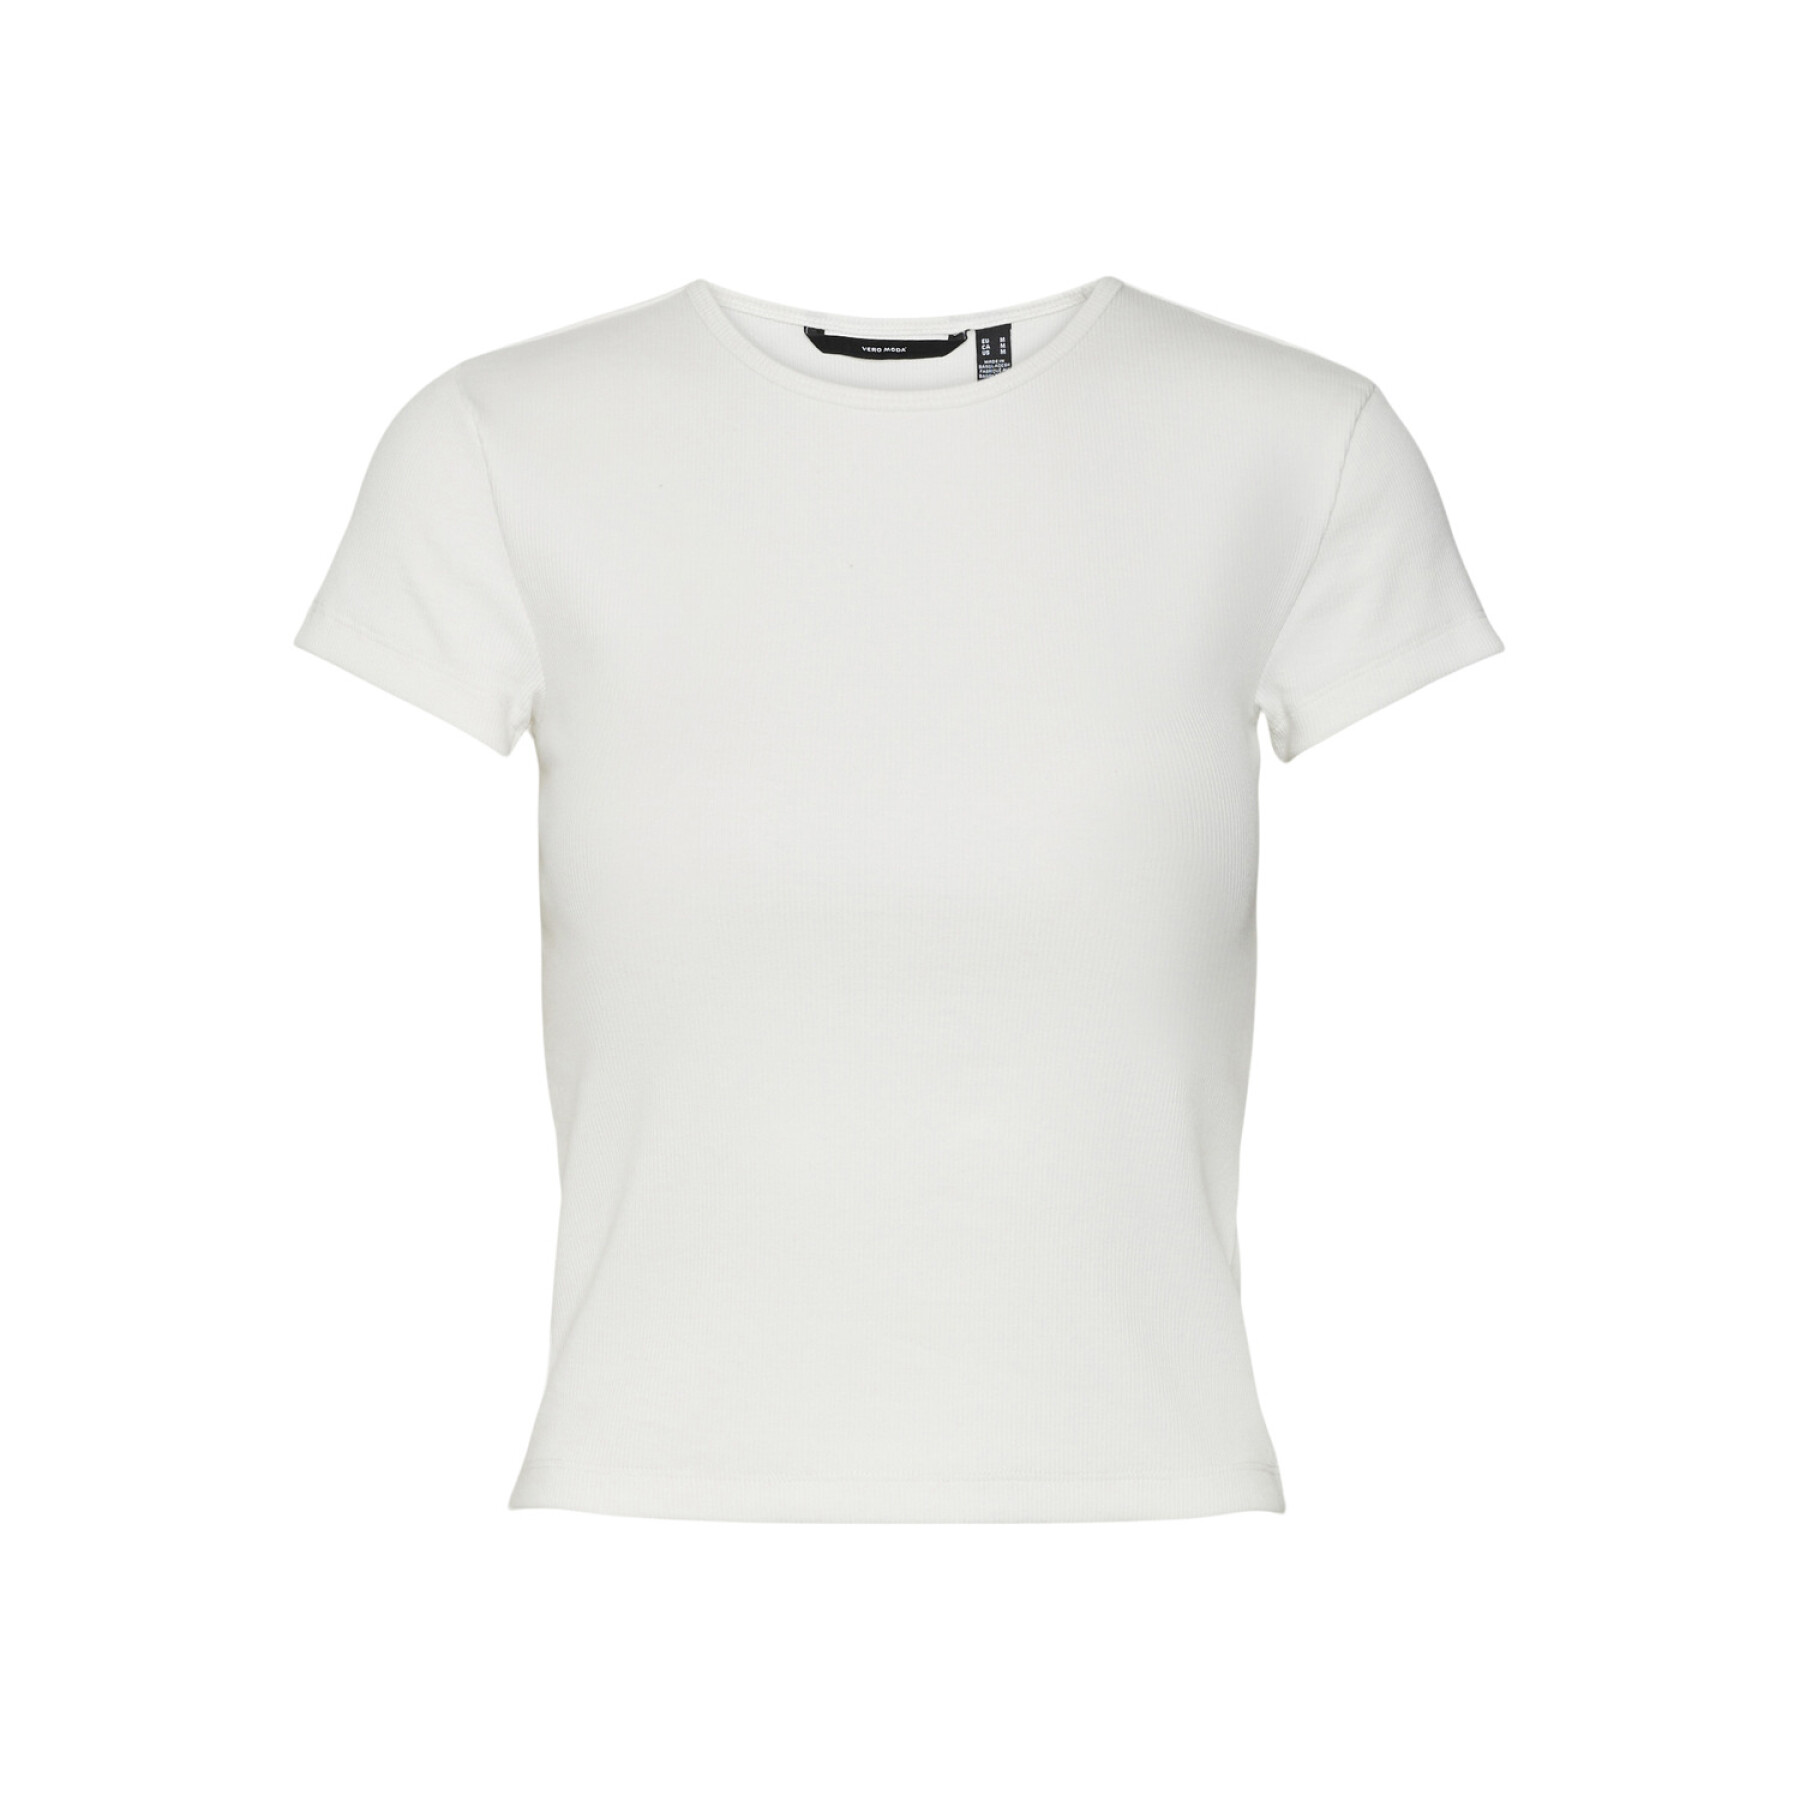 Women's T-shirt Vero Moda Chloe